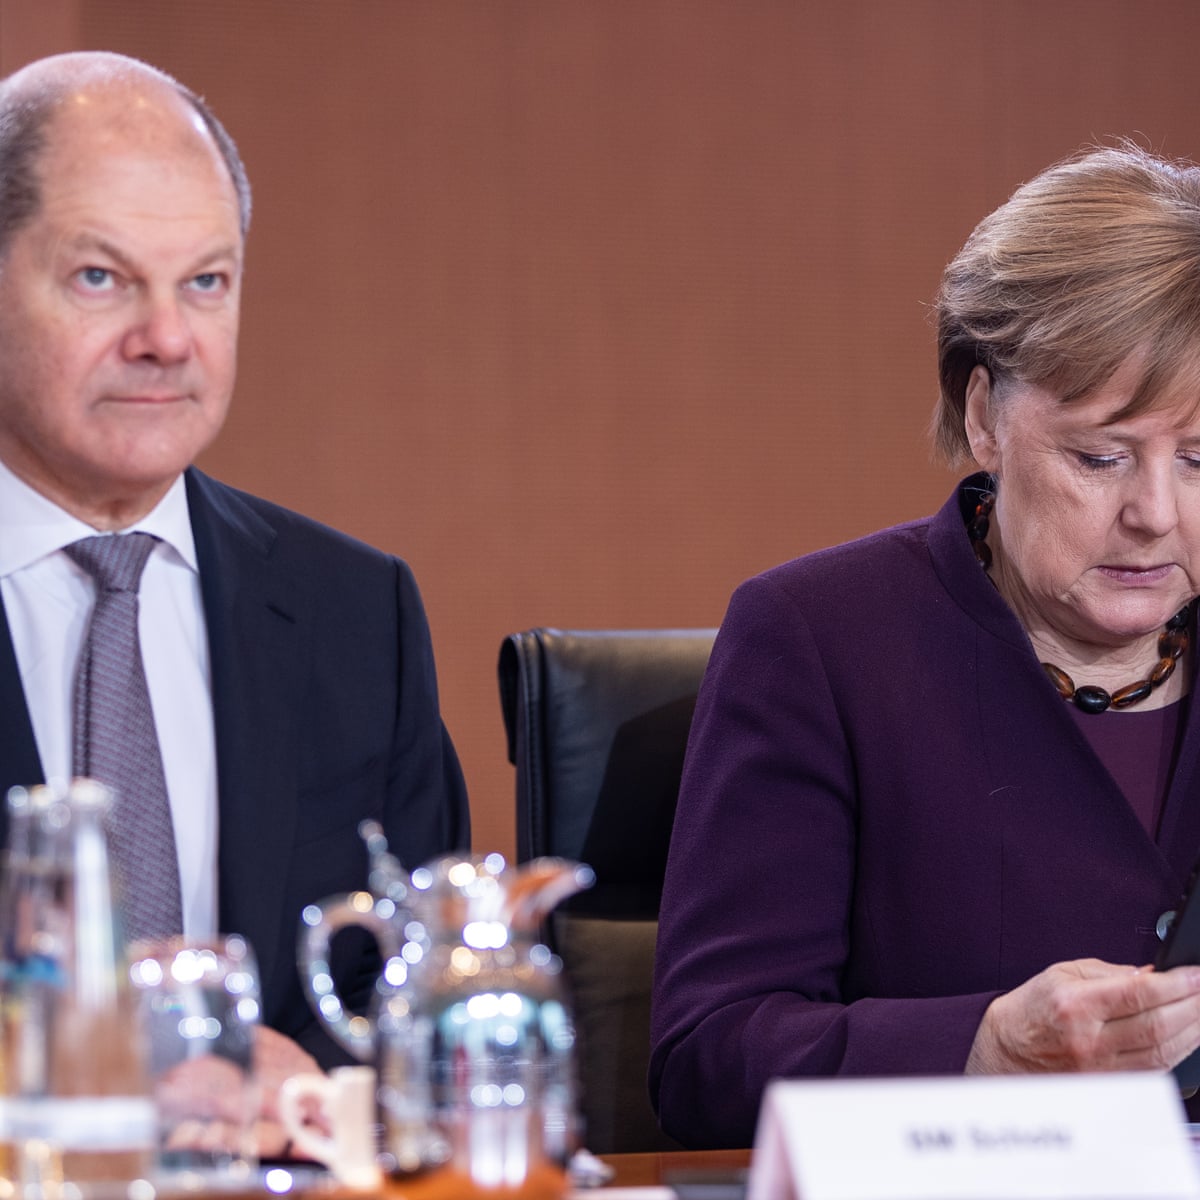 Germany S Spd Picks Merkel Like Figure To Run For Top Job In 2021 Germany The Guardian